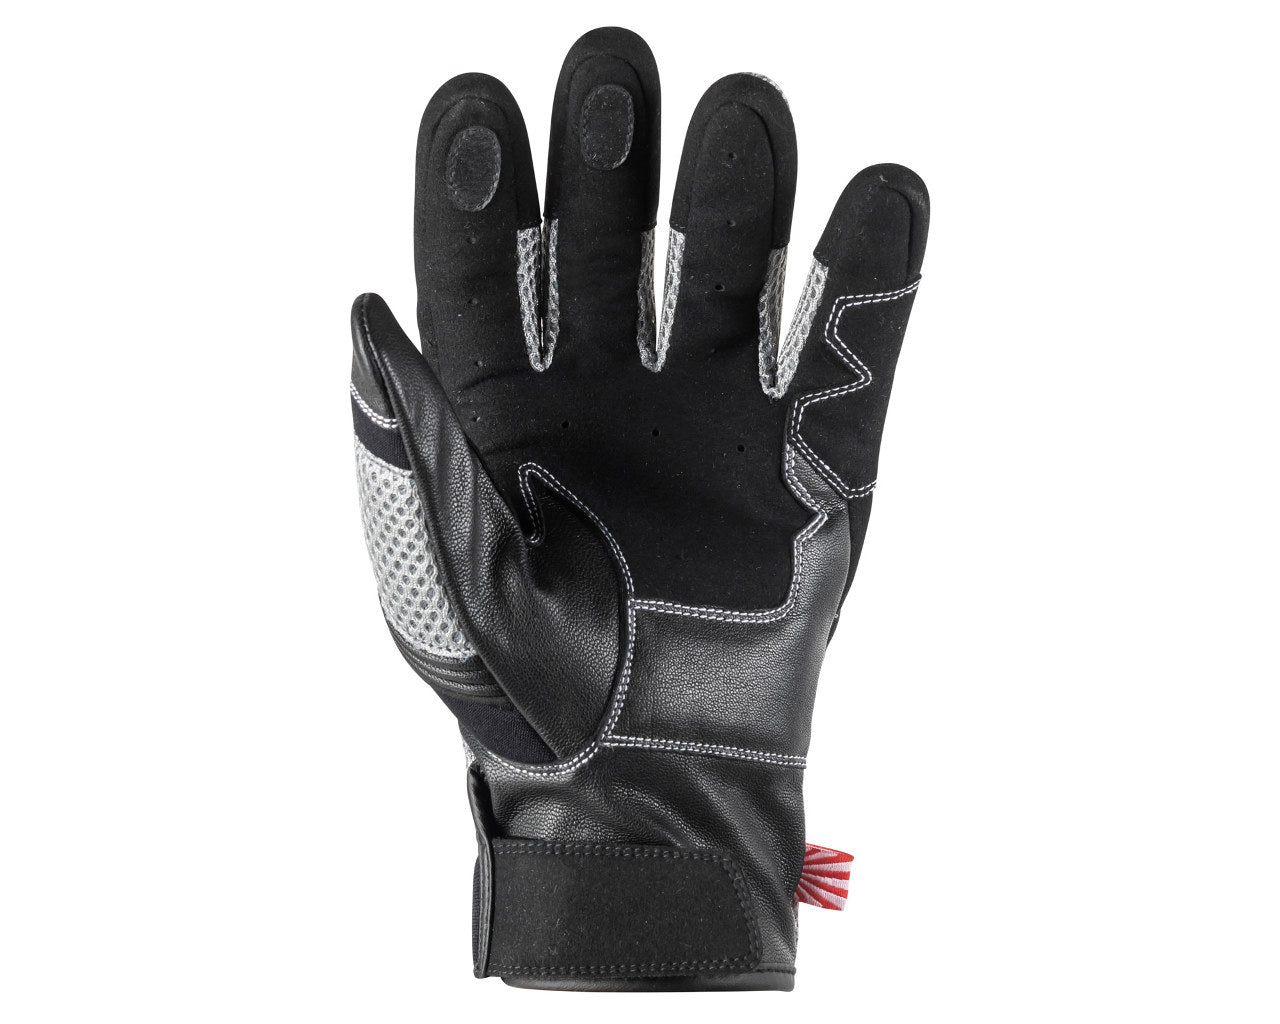 Noru Kiryu Glove Black/Grey